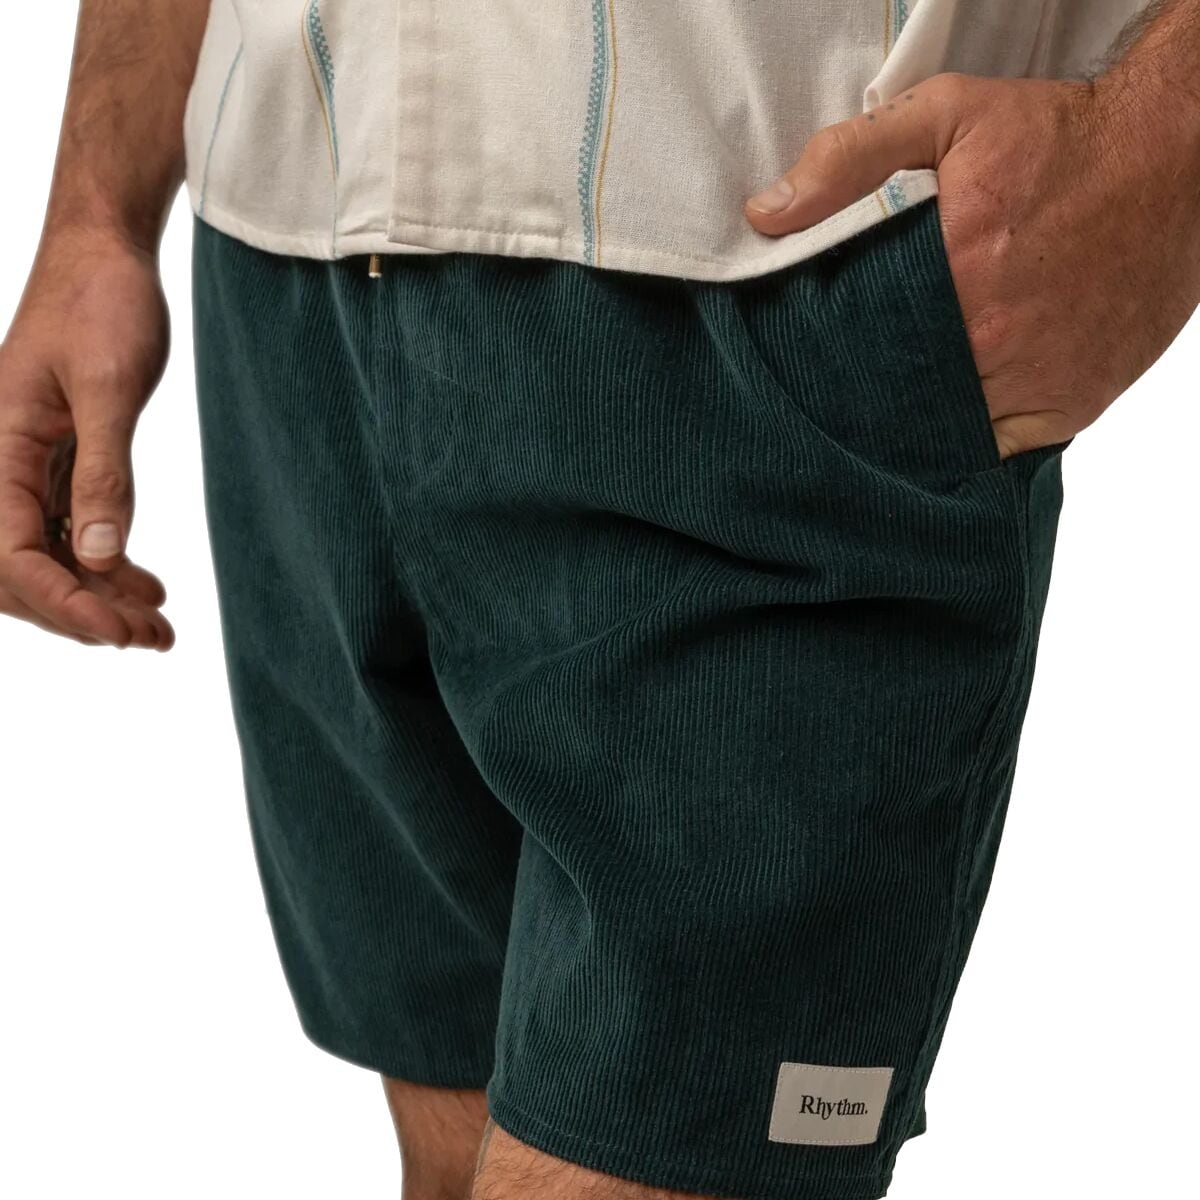 Rhythm Cord Jam Shorts - Men's - Clothing